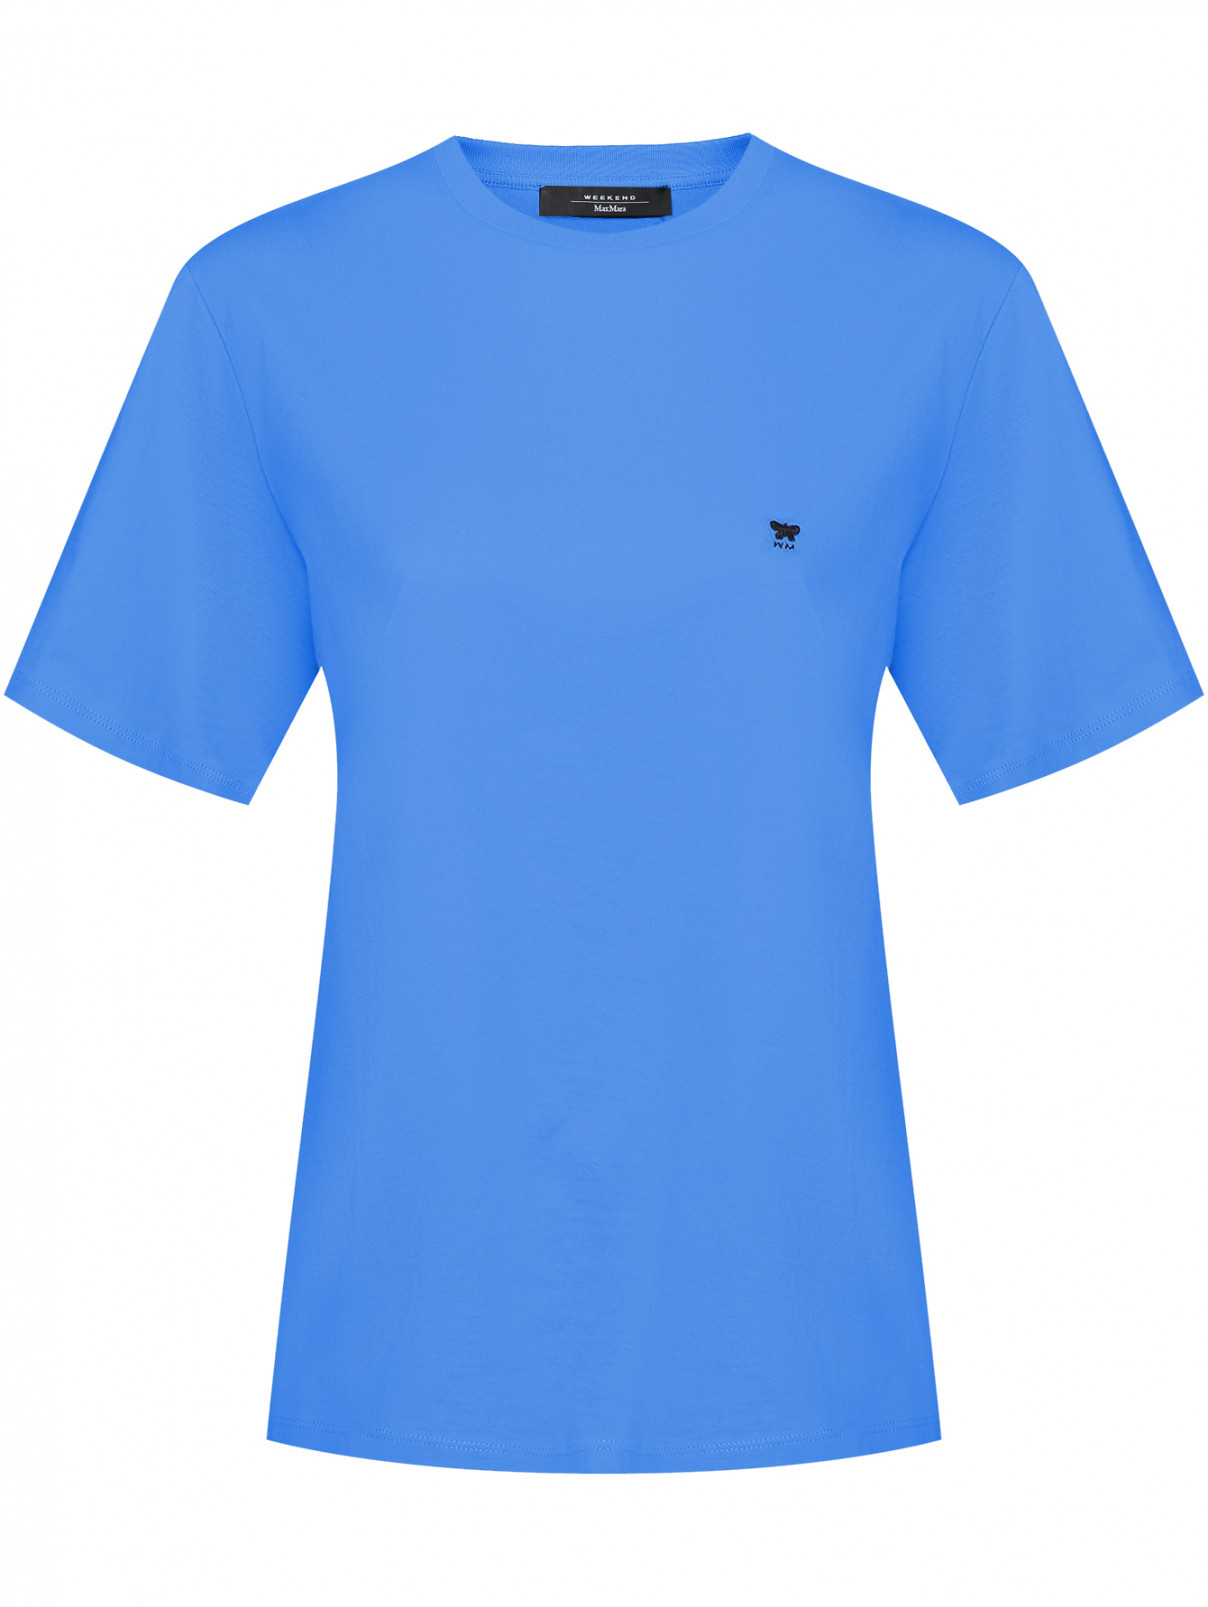 Базовая футболка Weekend Max Mara  –  Общий вид  – Цвет:  Синий